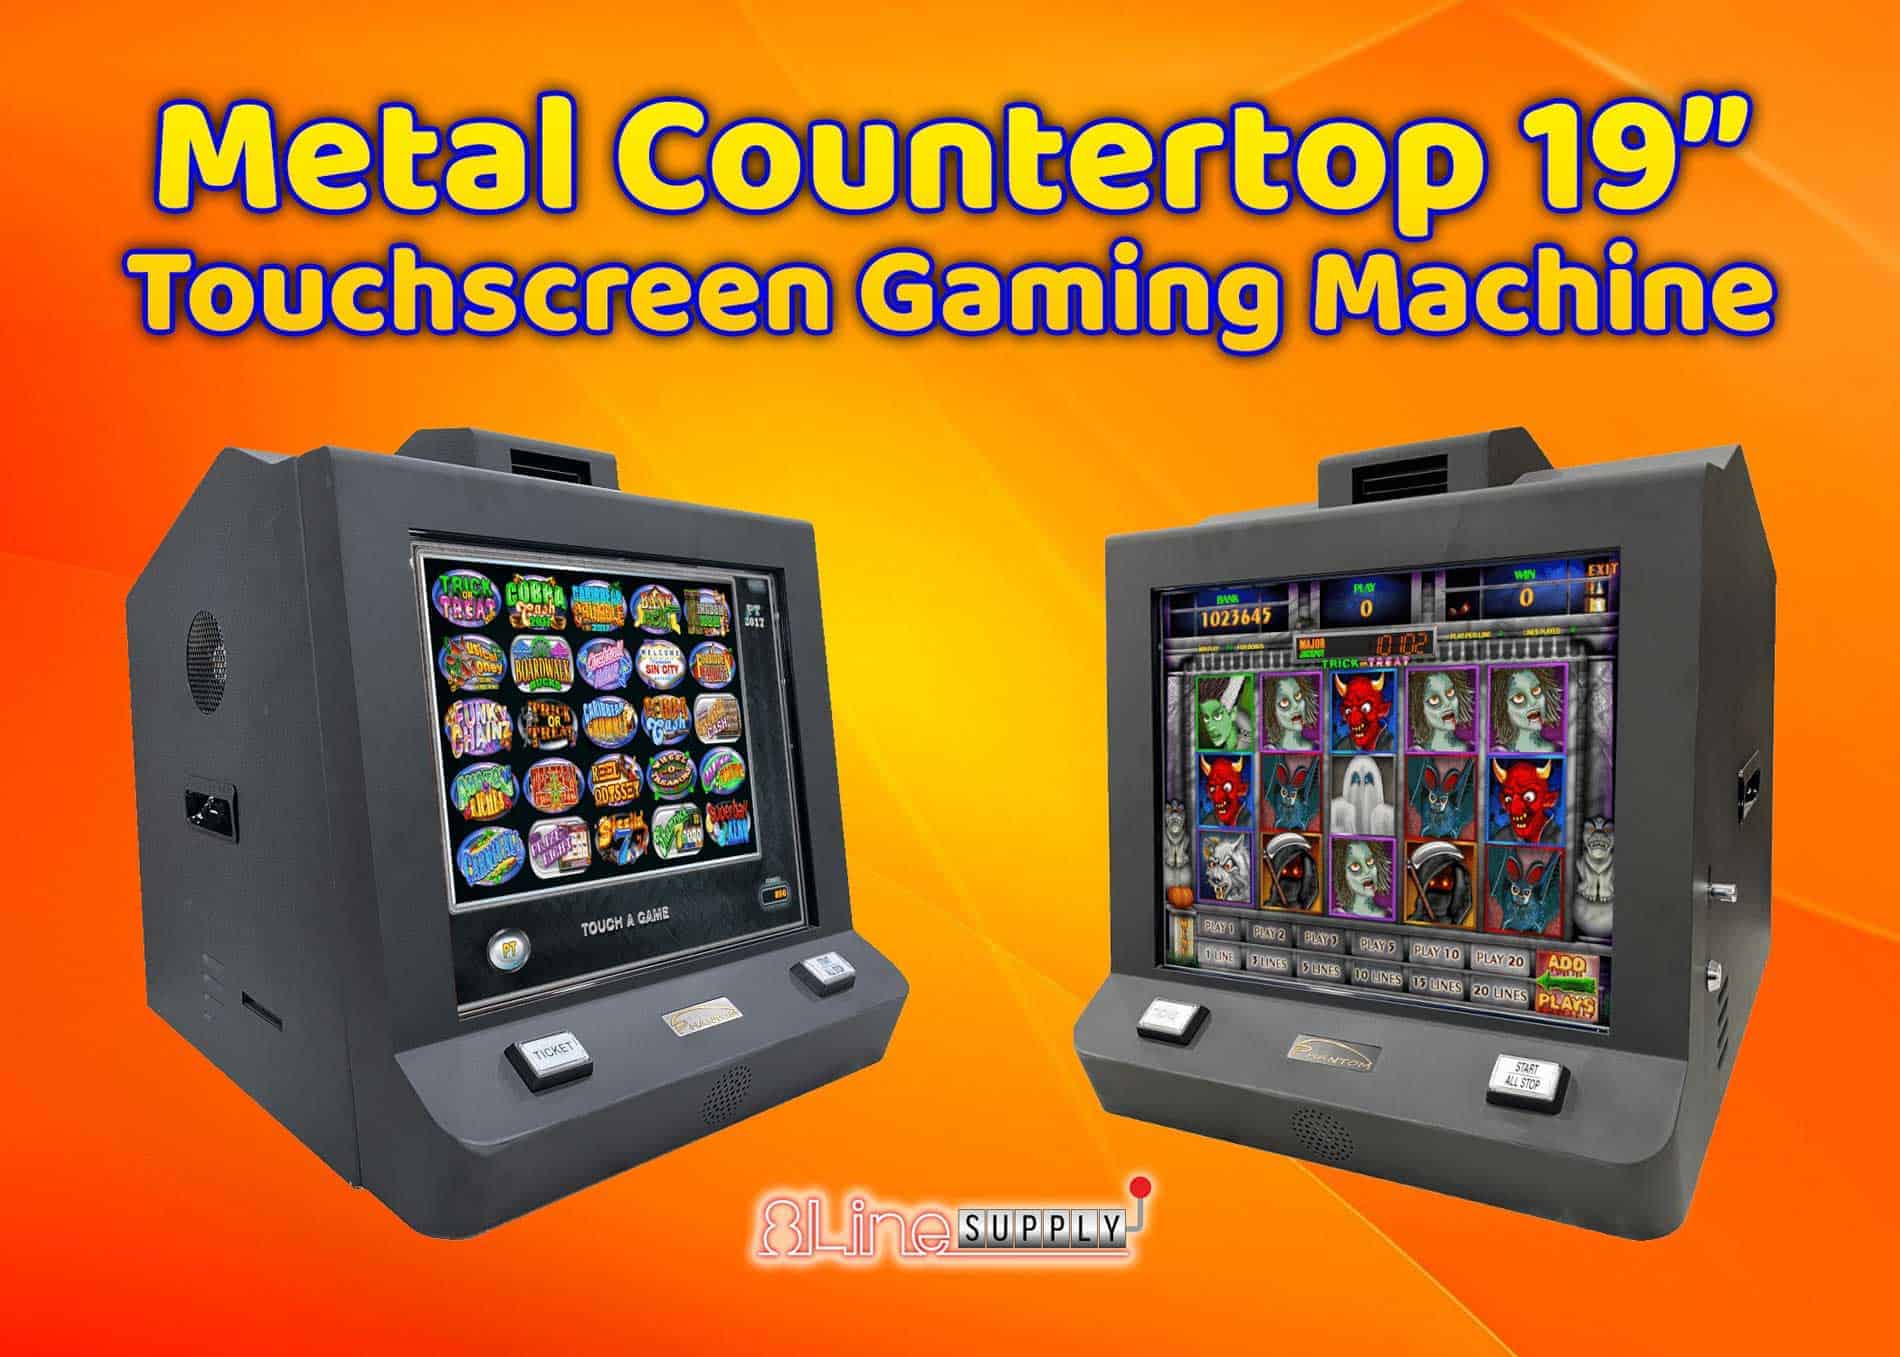 8 Line Supply metal countertop 19” touchscreen gaming machine